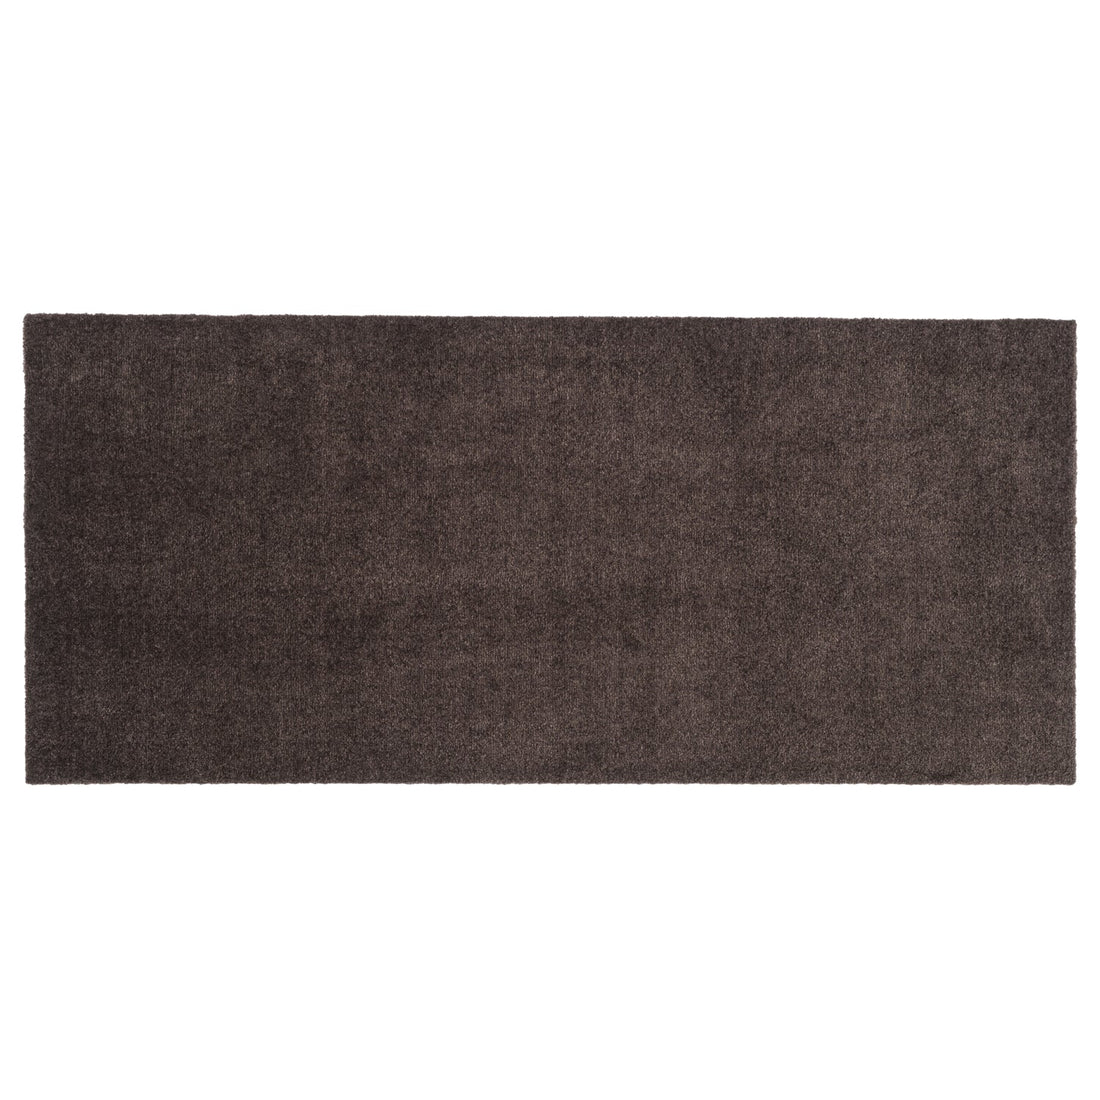 Blanket/had 67 x 150 cm - Uni Color/Brown